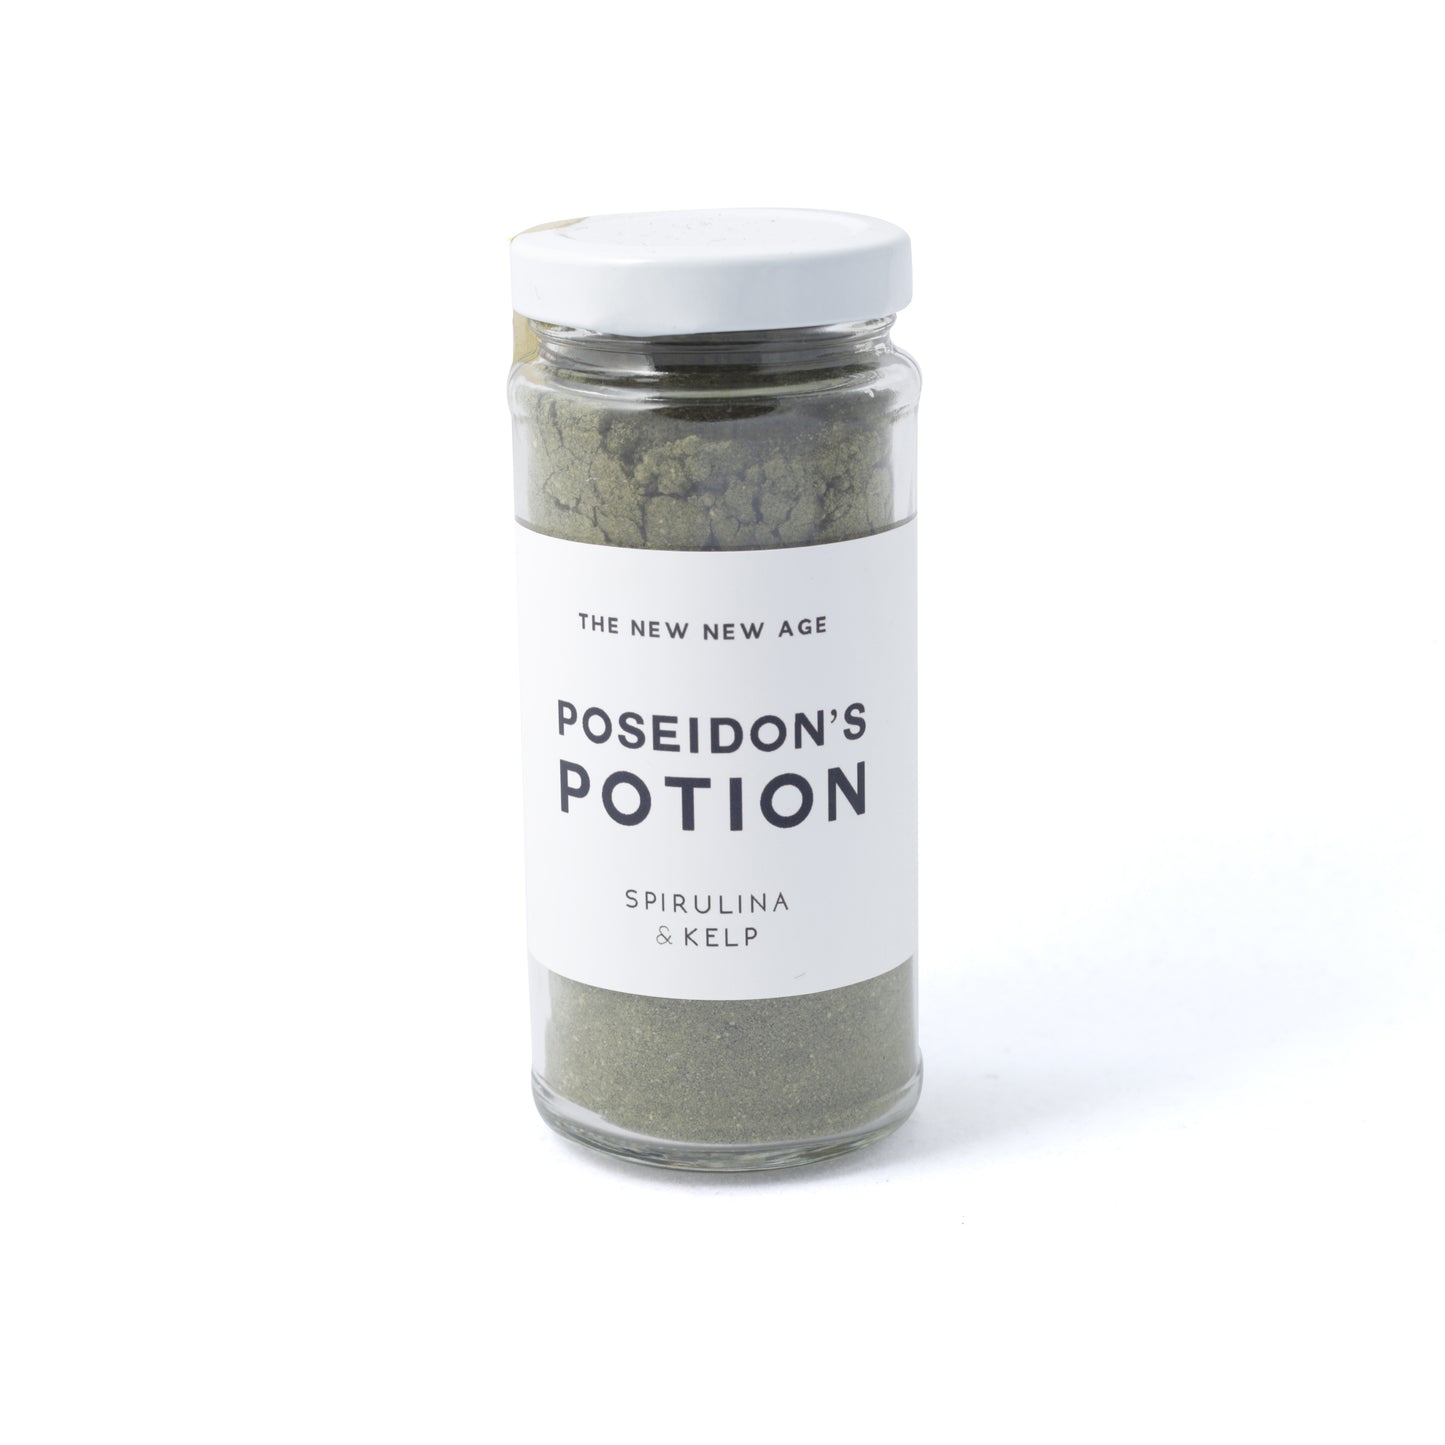 Poseidon's potion 80g